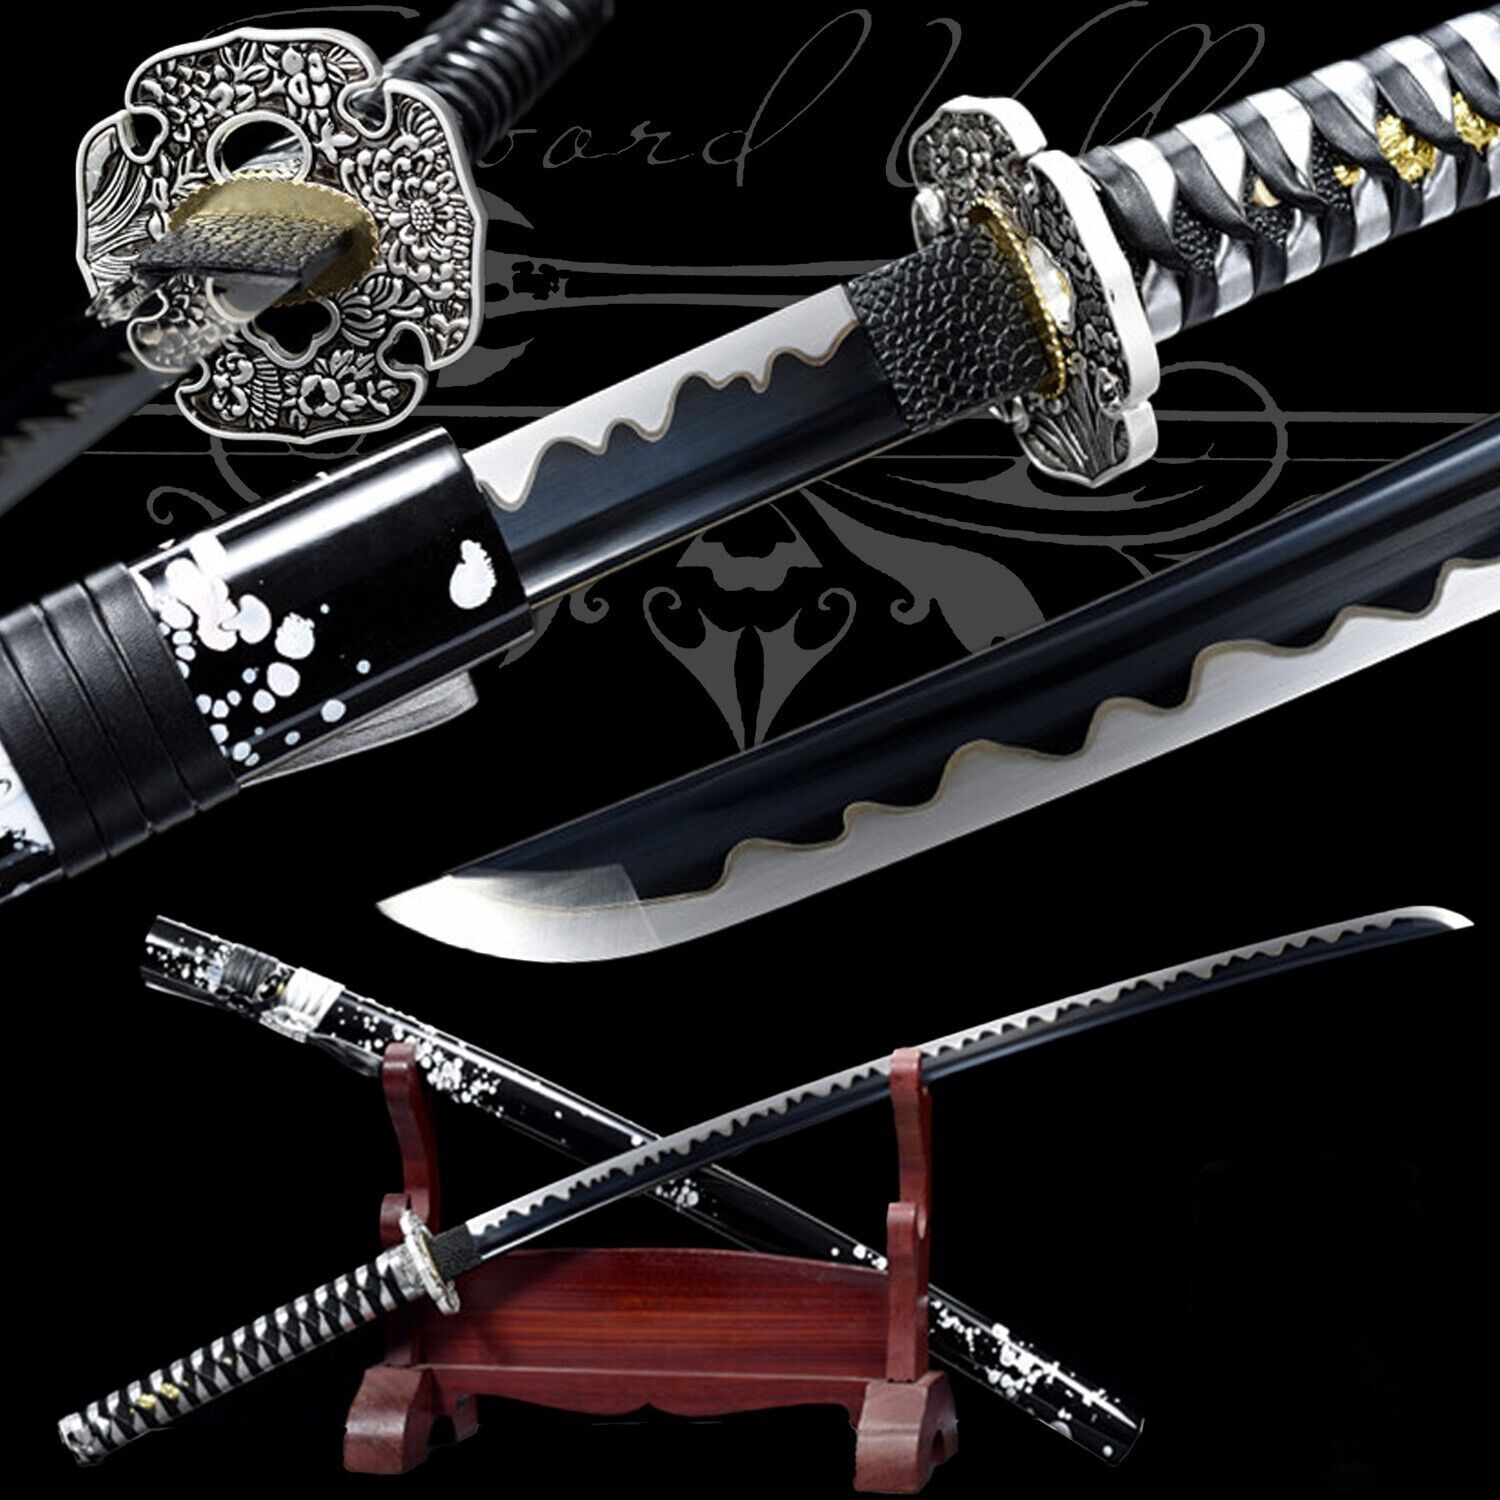 Handmade Katana/Carbon Steel/Collectible Sword/High-Quality Blade/Japanese/Real